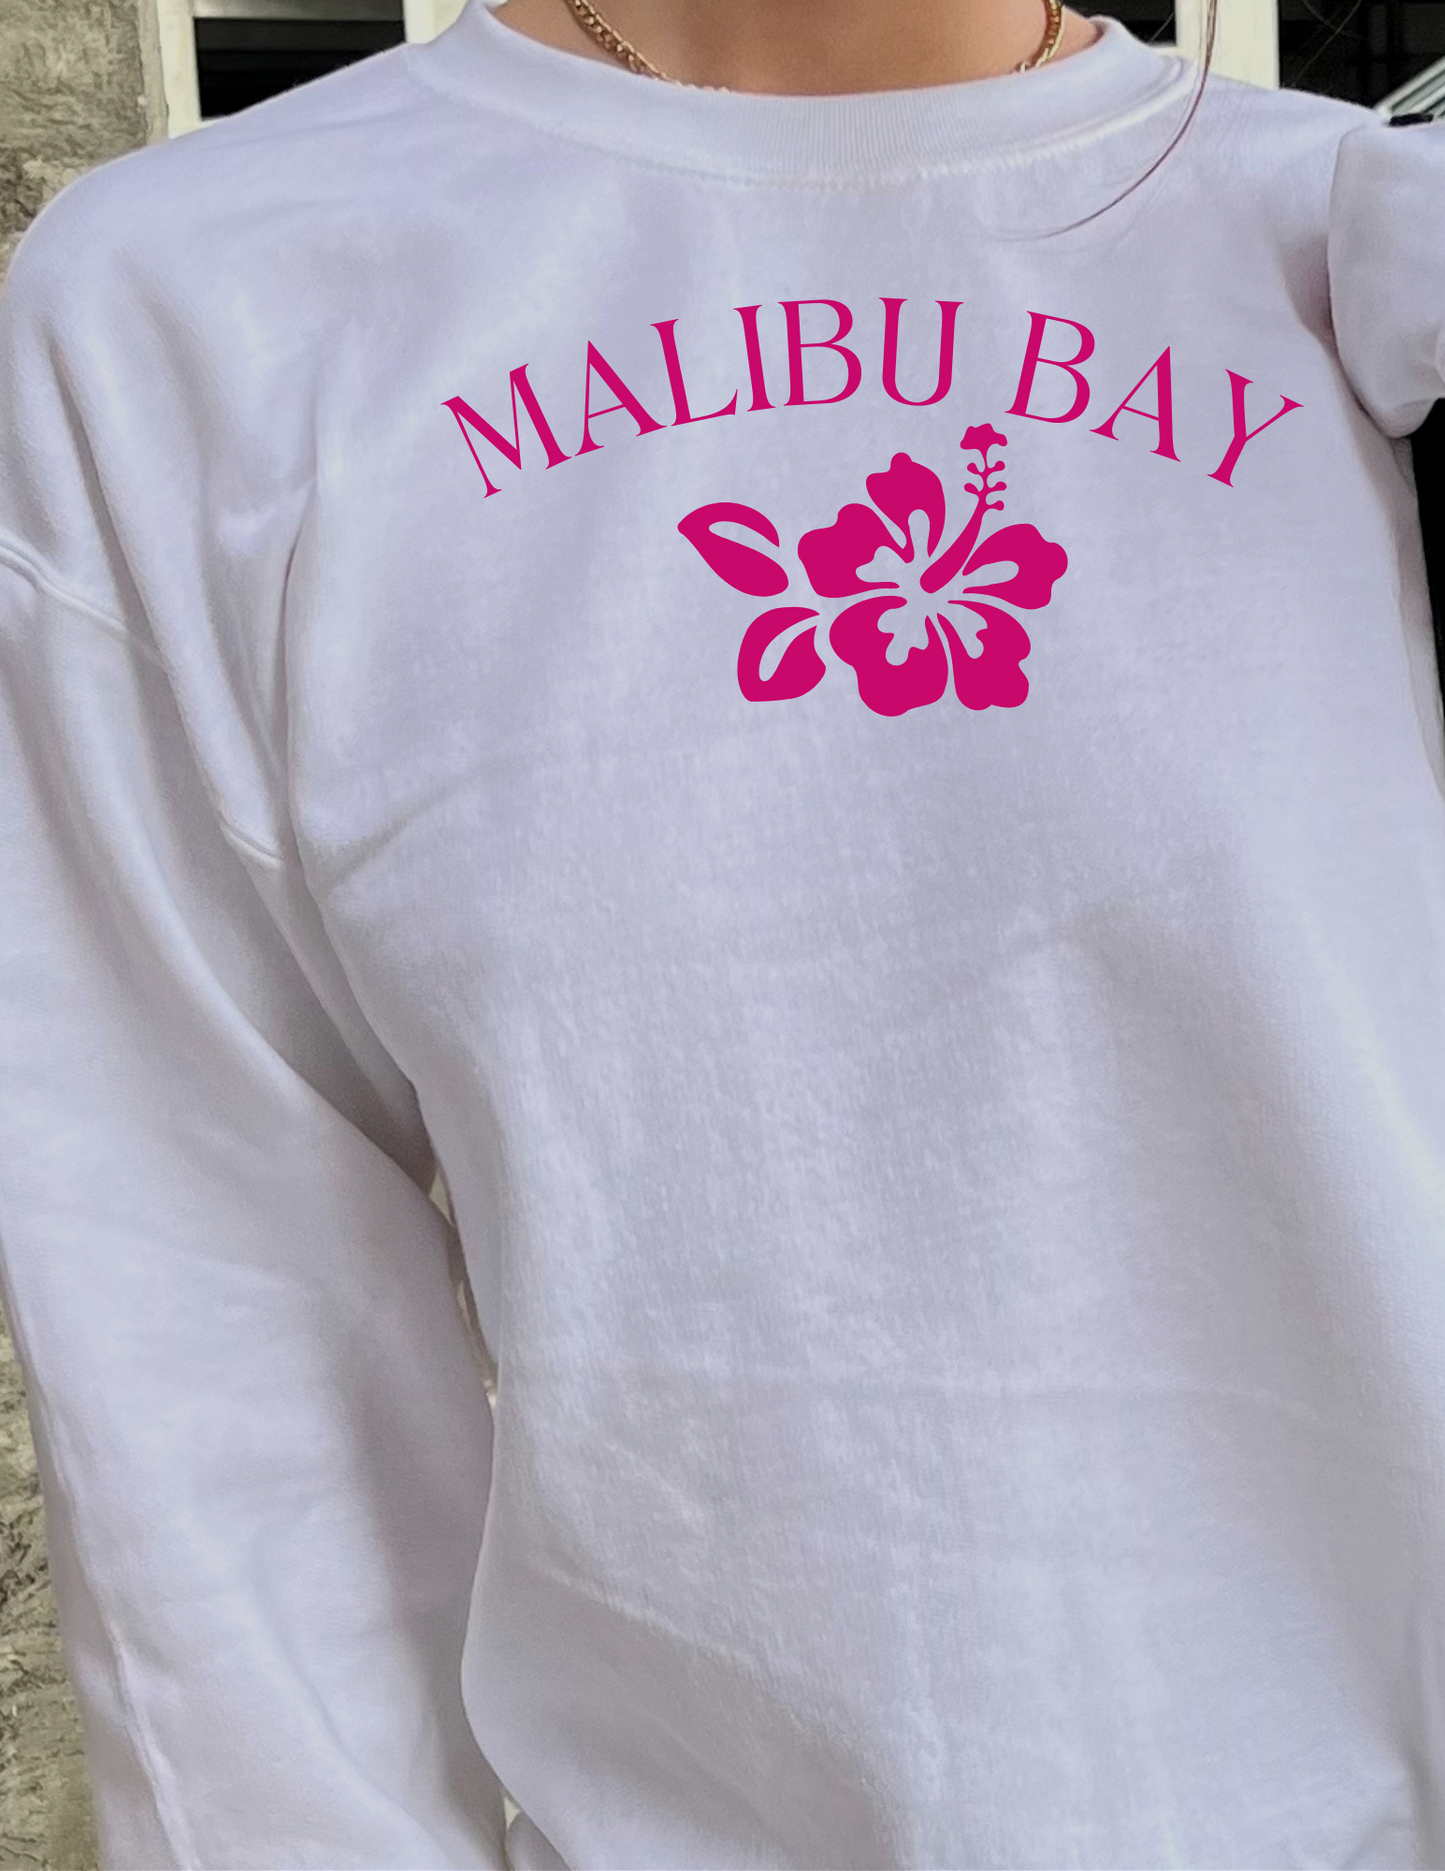 Malibu Bay Crew